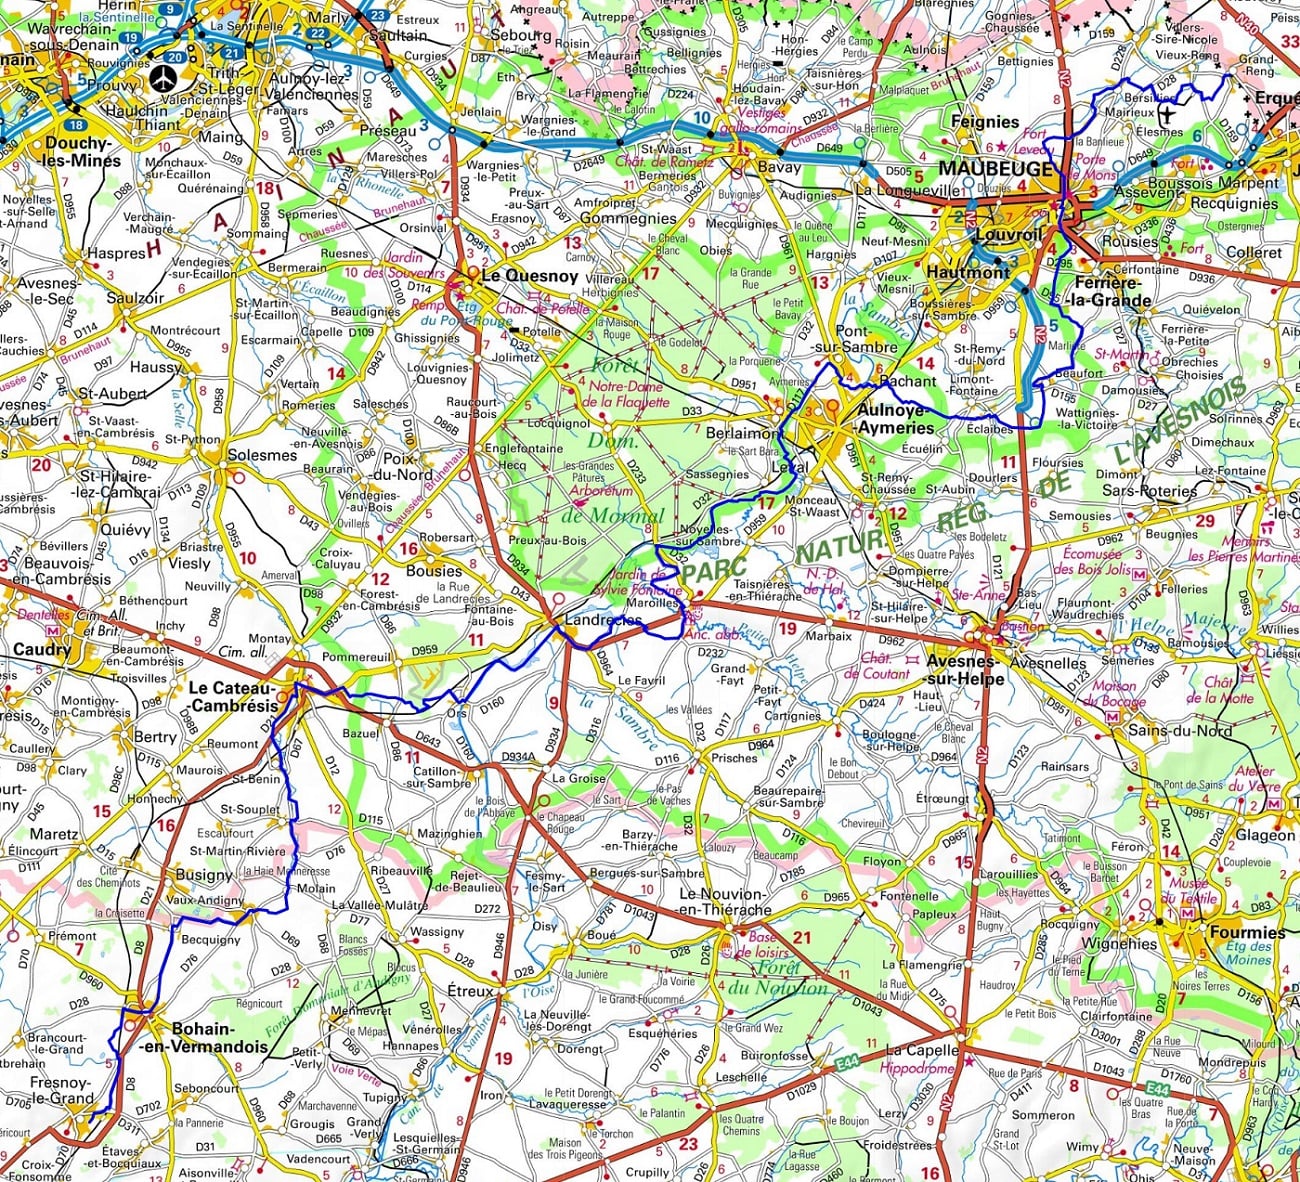 GR655 Via Turonensis Way of Santiago de Compostela Hiking from Vieux-Reng (Nord) to Fresnoy-le-Grand (Aisne) 1